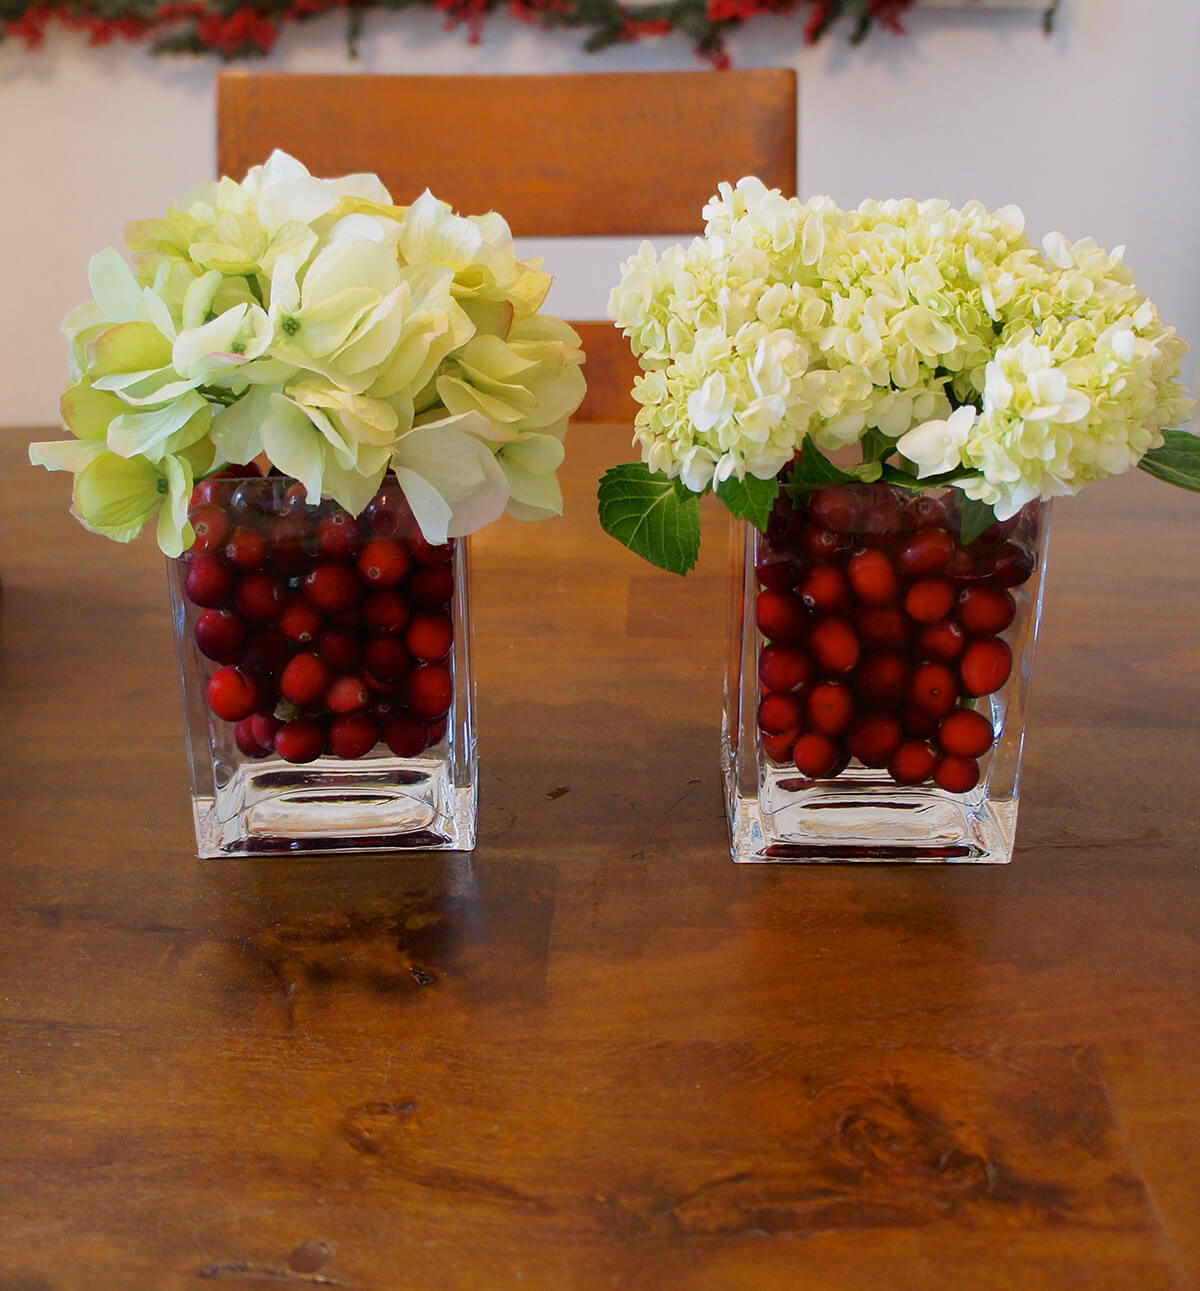 Cranberry Christmas Centerpiece with Hydrangeas